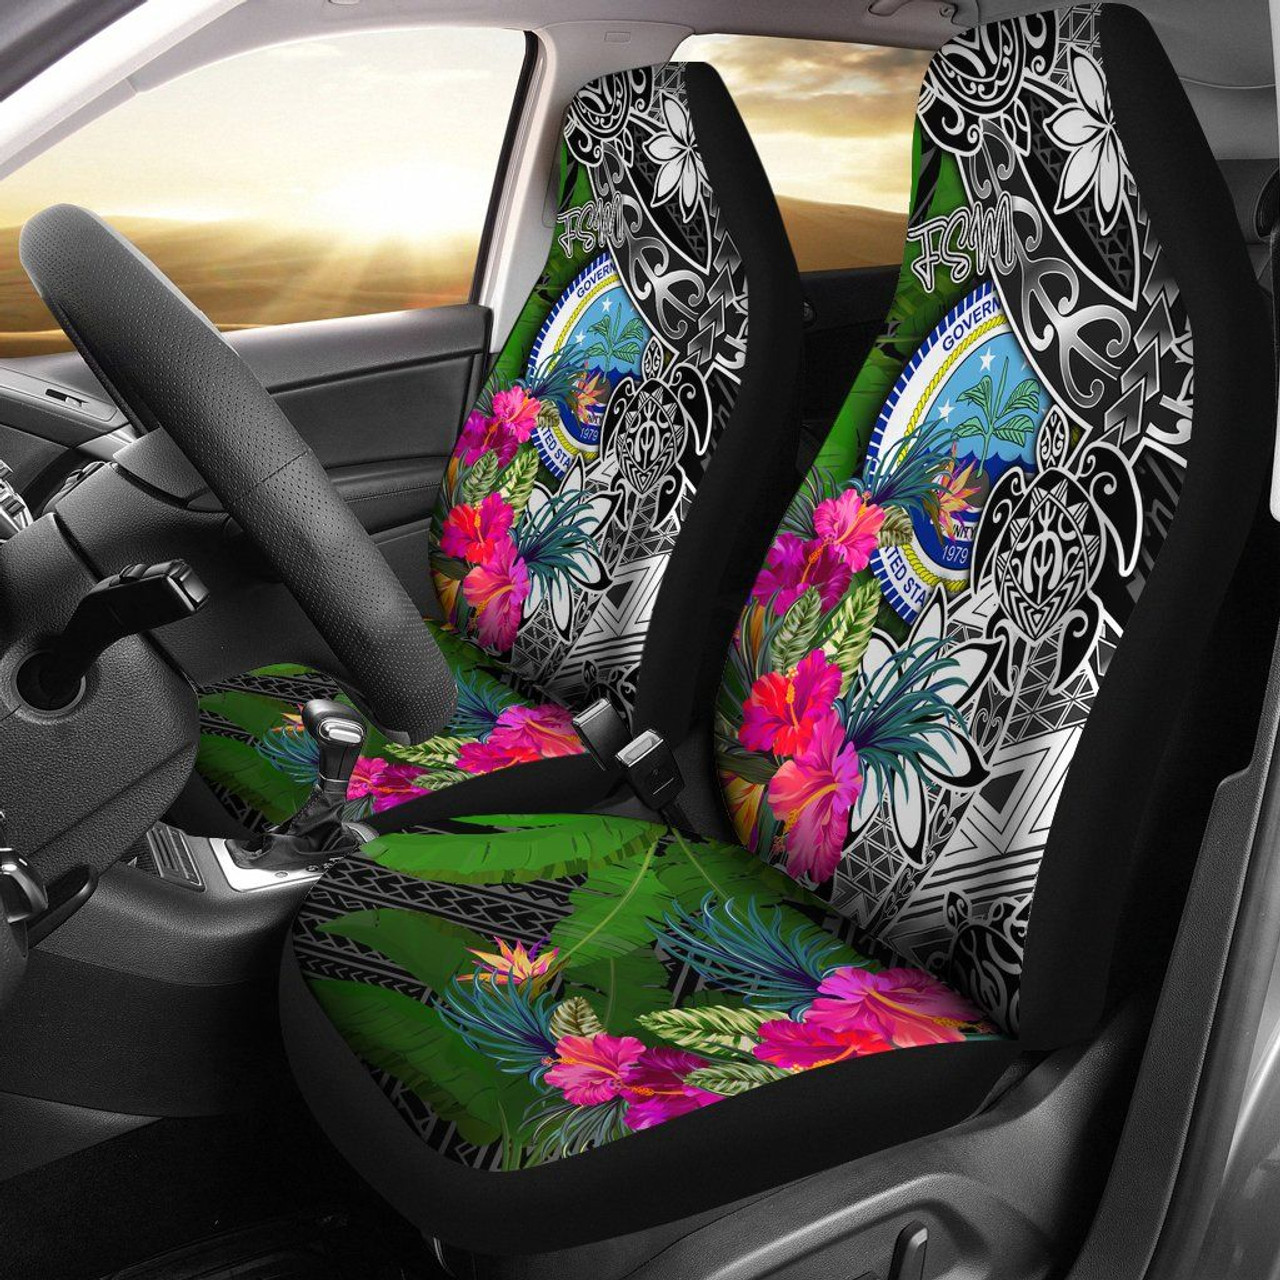 Federated States of Micronesia Car Seat Covers - Turtle Plumeria Banana Leaf